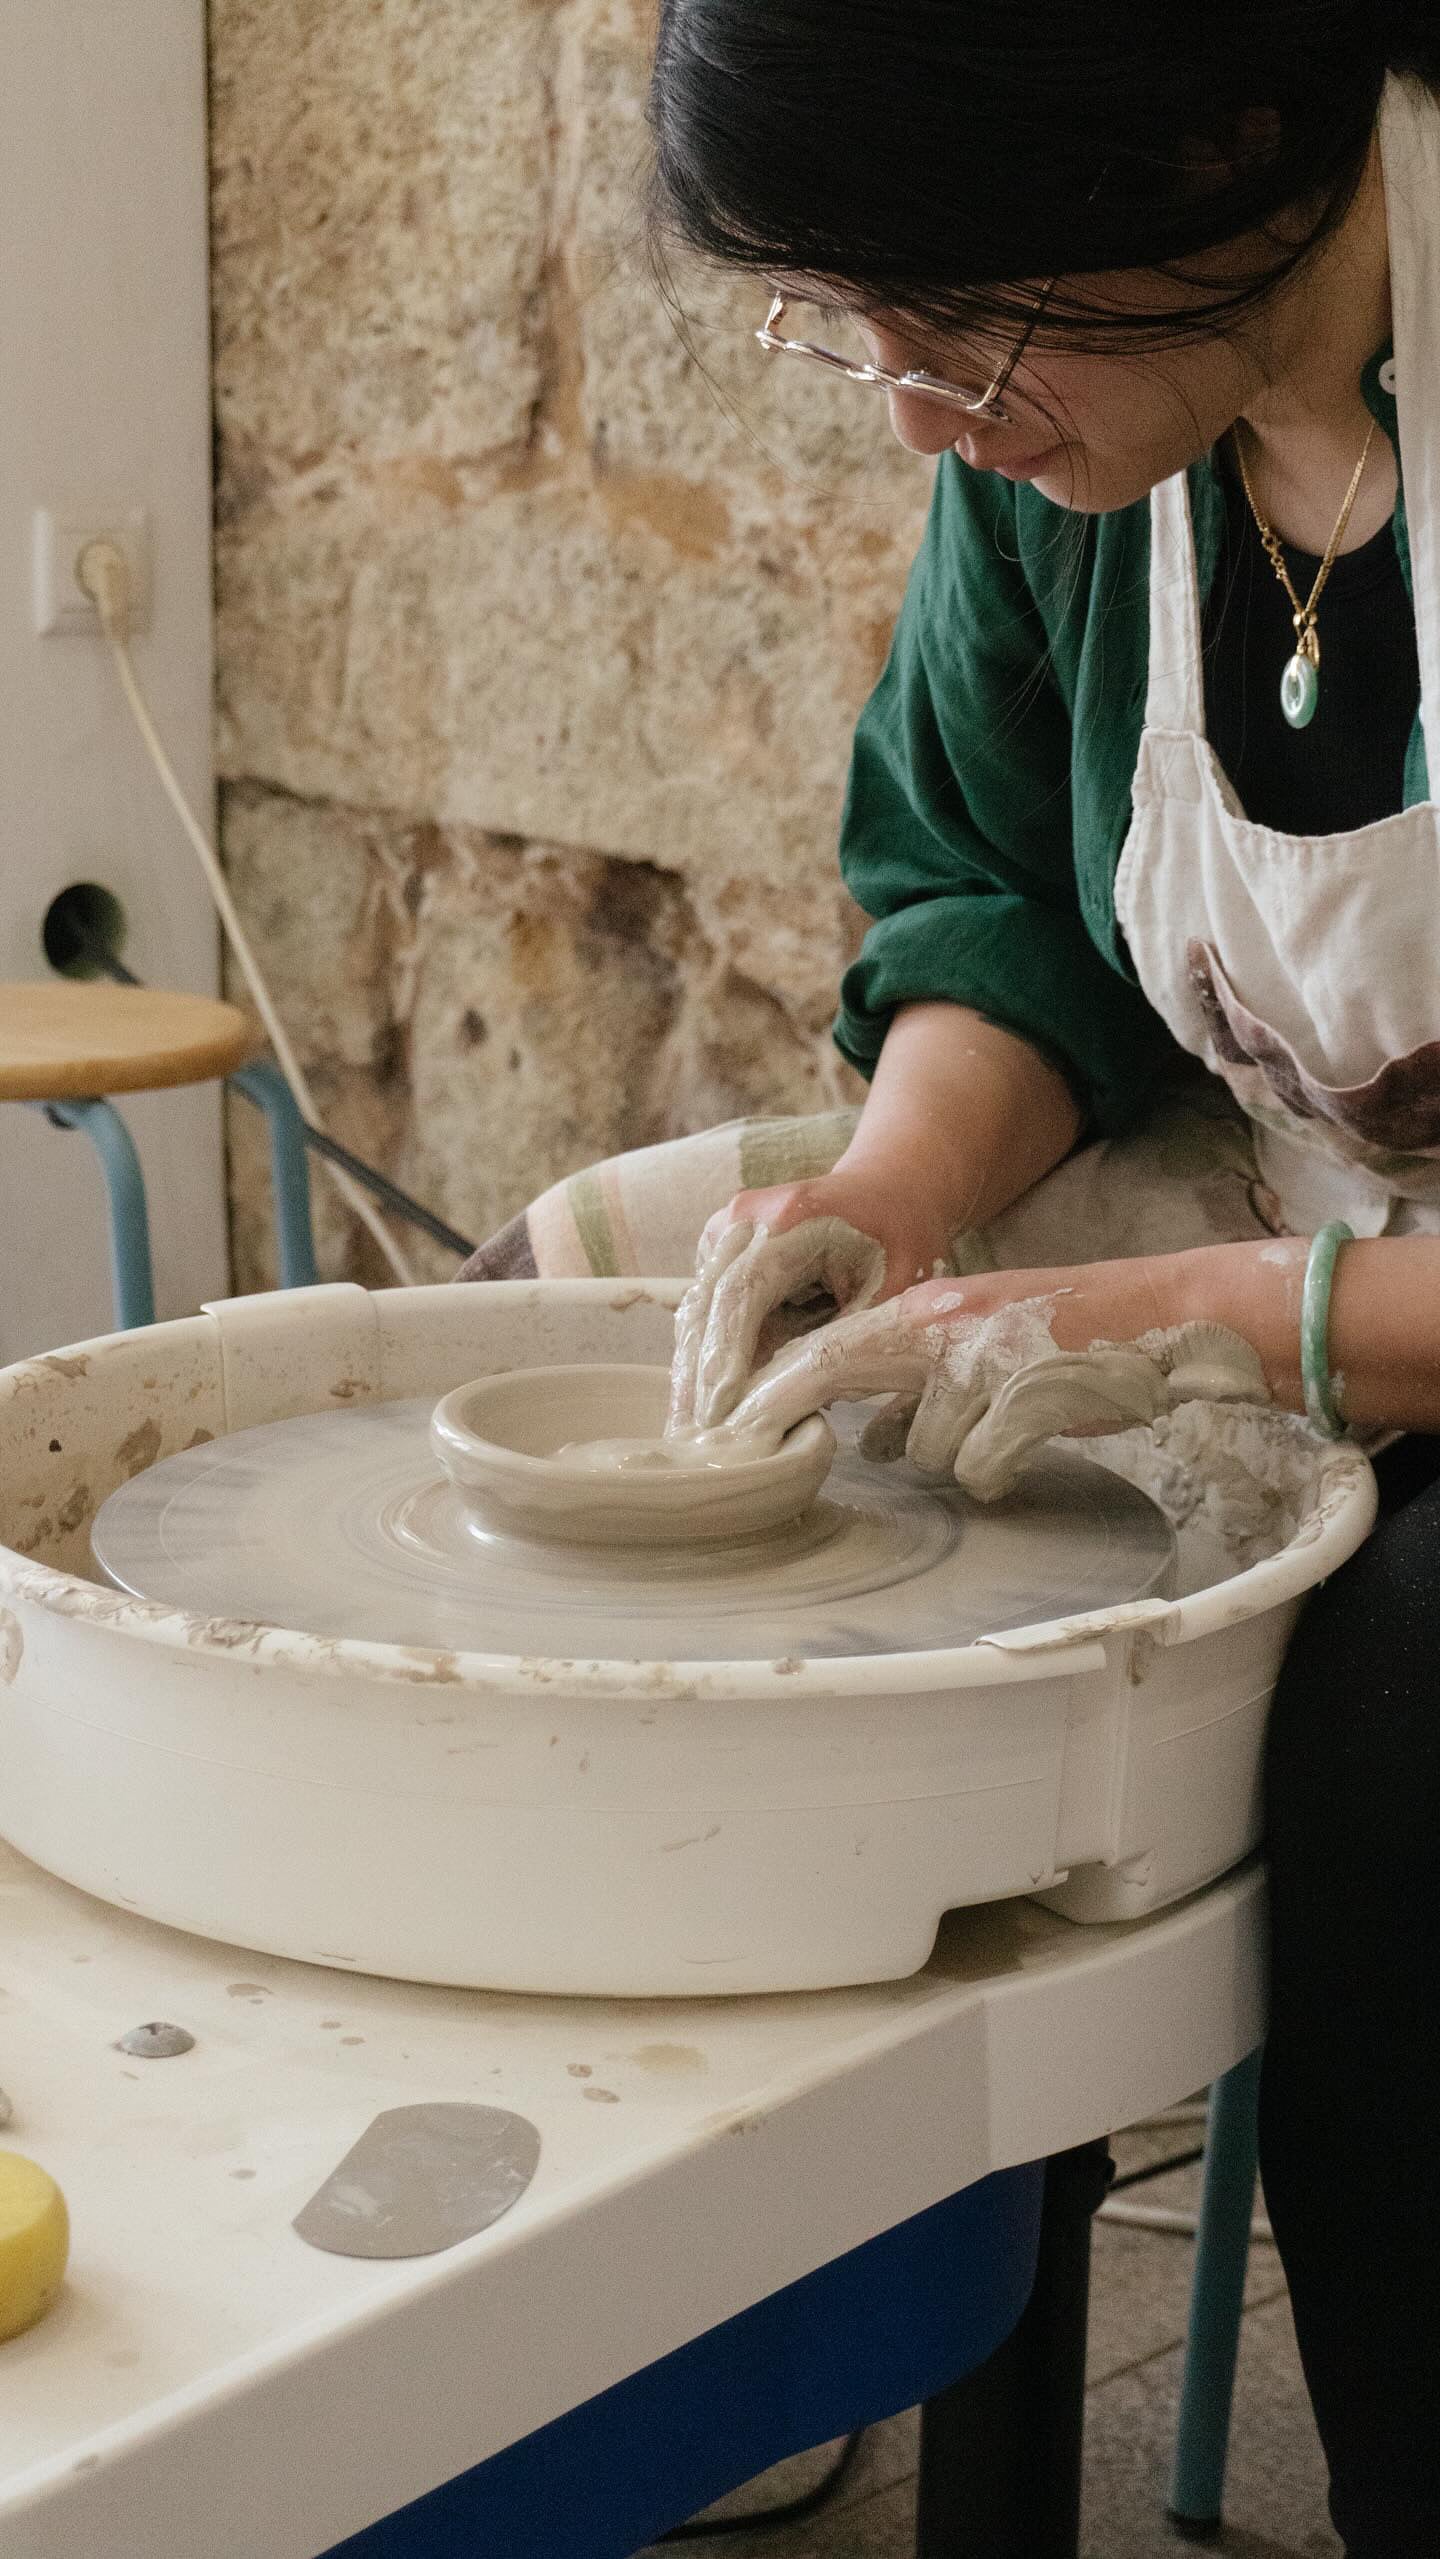 Ceramic Workshop "Pottery Wheel For Beginners" with Sara in Vila Nova de Gaia, Porto, Portugal by subcultours